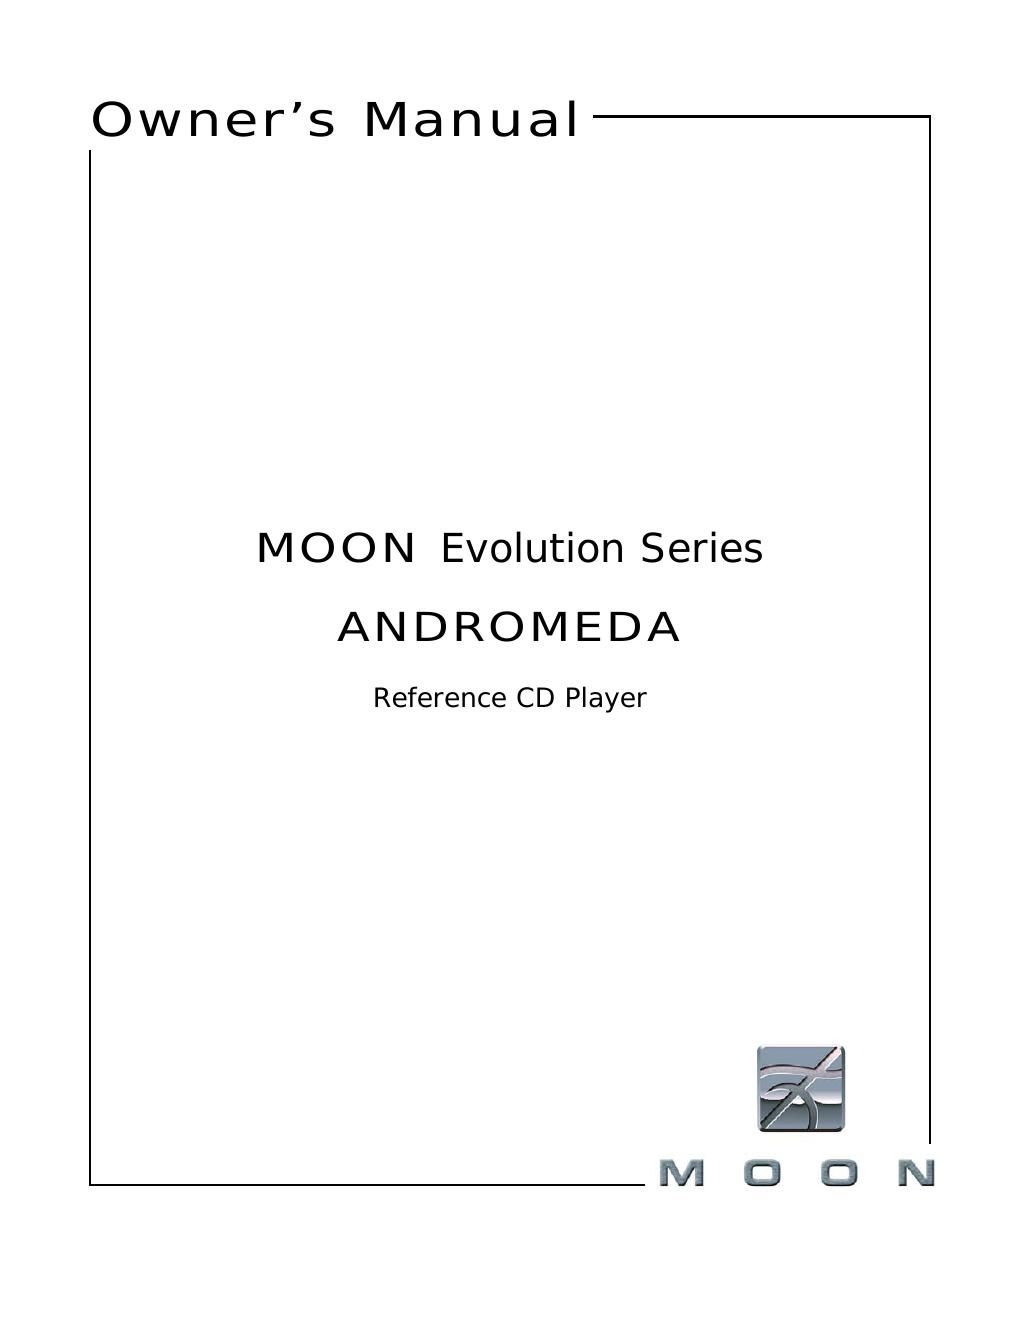 moon andromeda owners manual